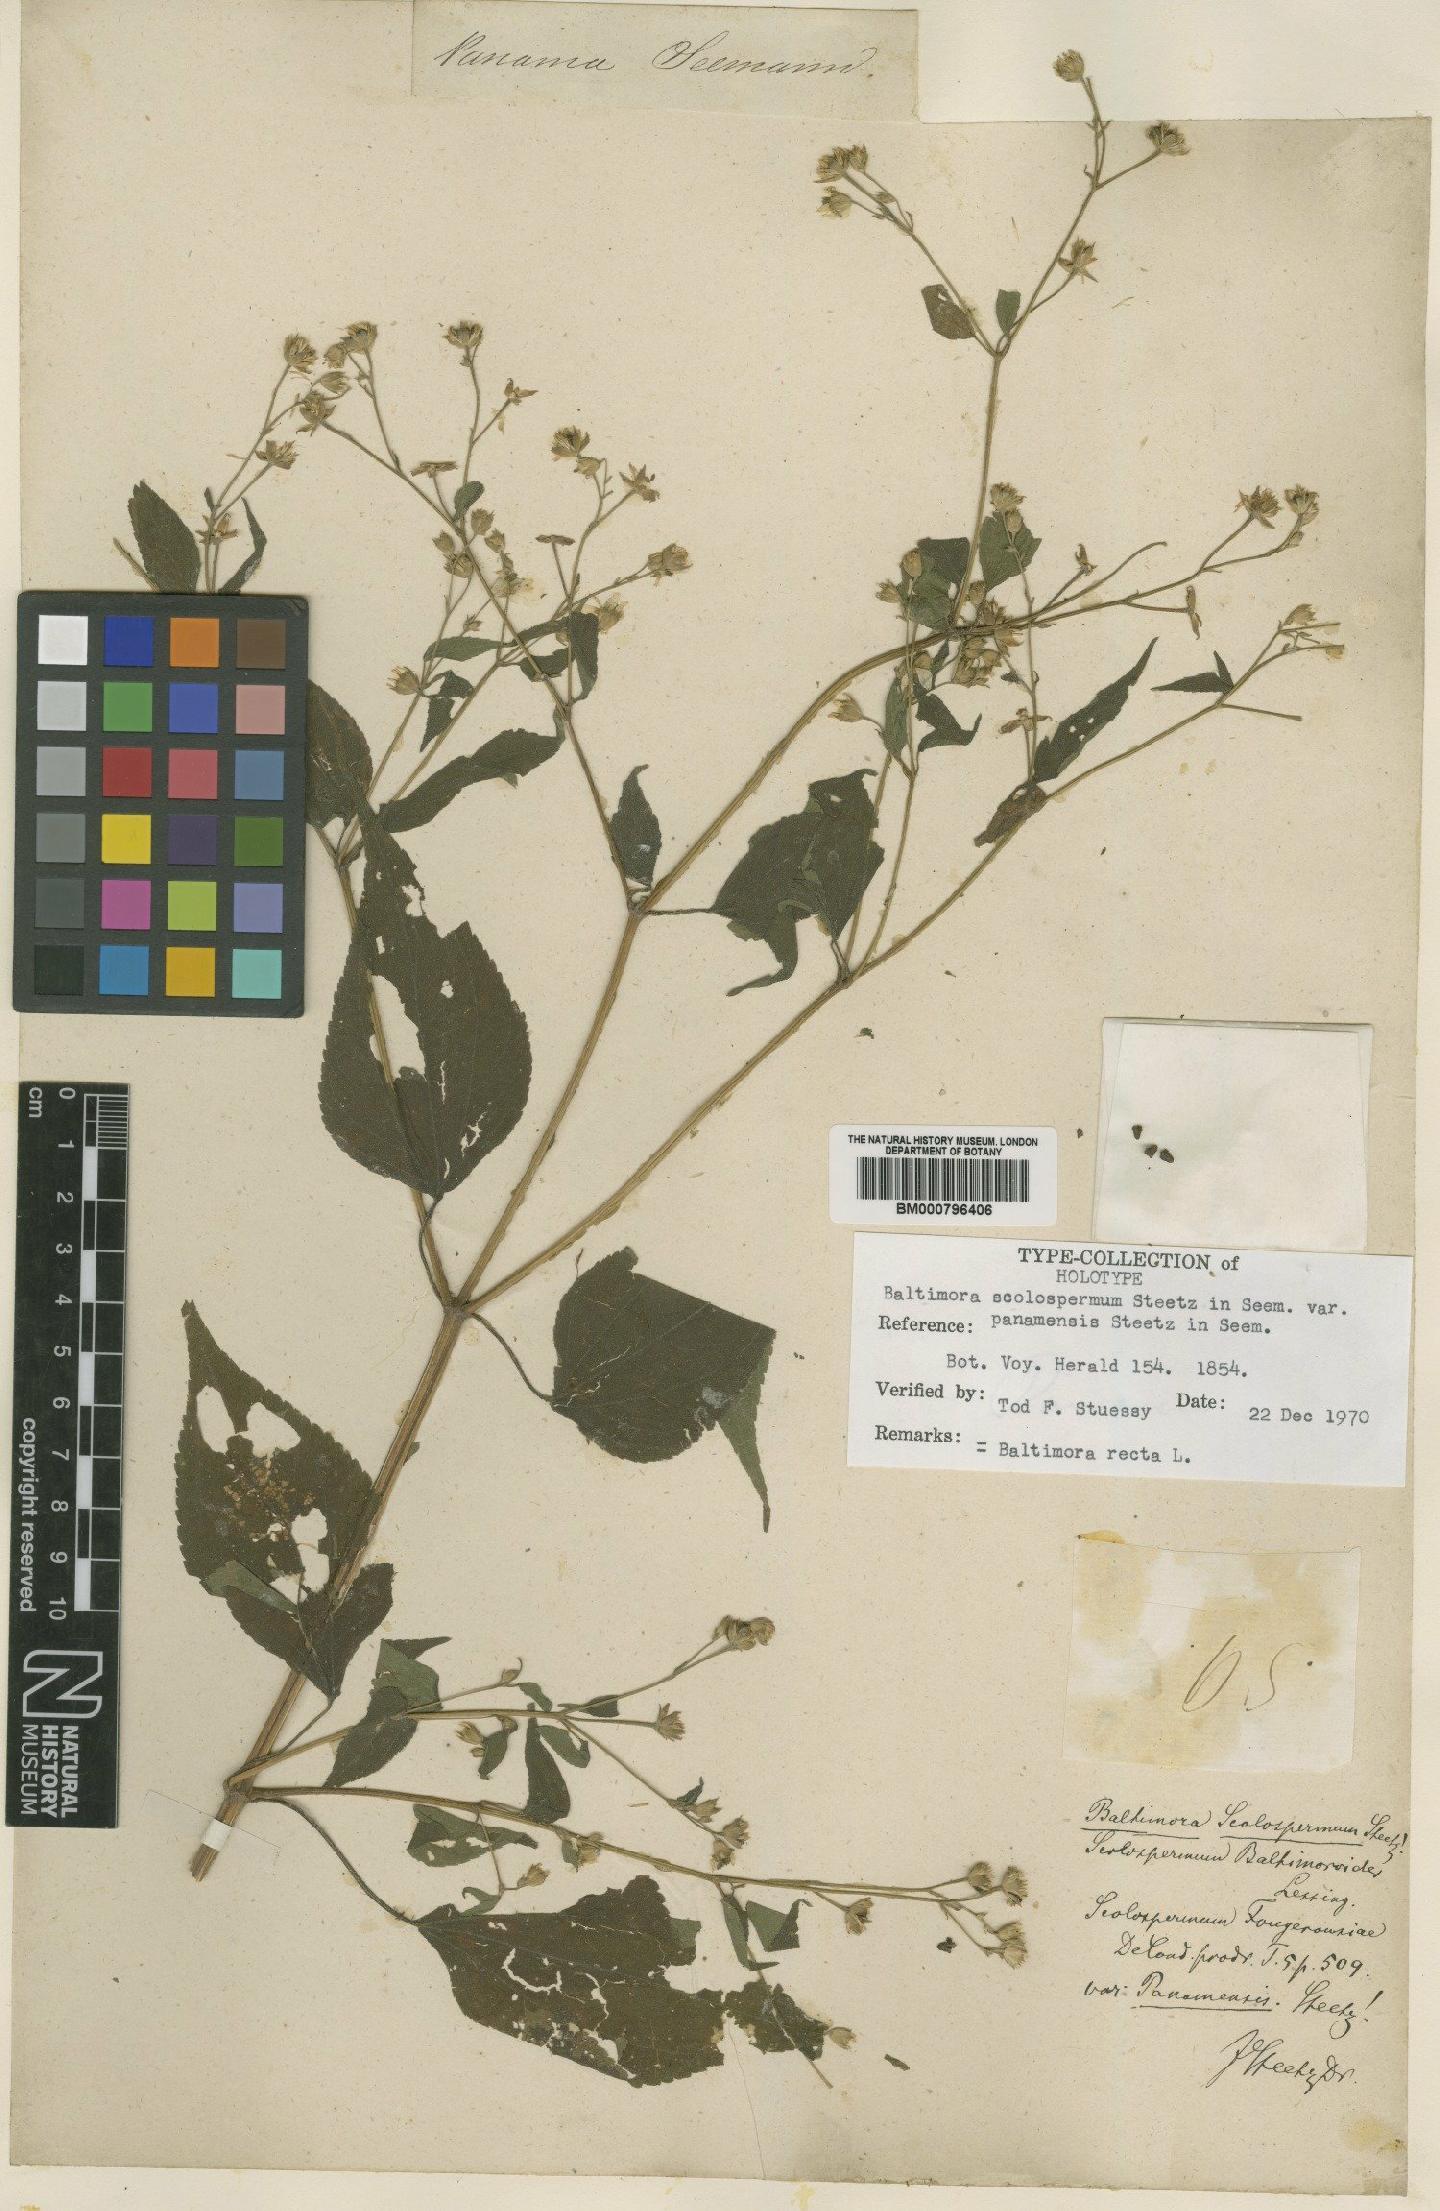 To NHMUK collection (Baltimora recta L.; Holotype; NHMUK:ecatalogue:4989462)